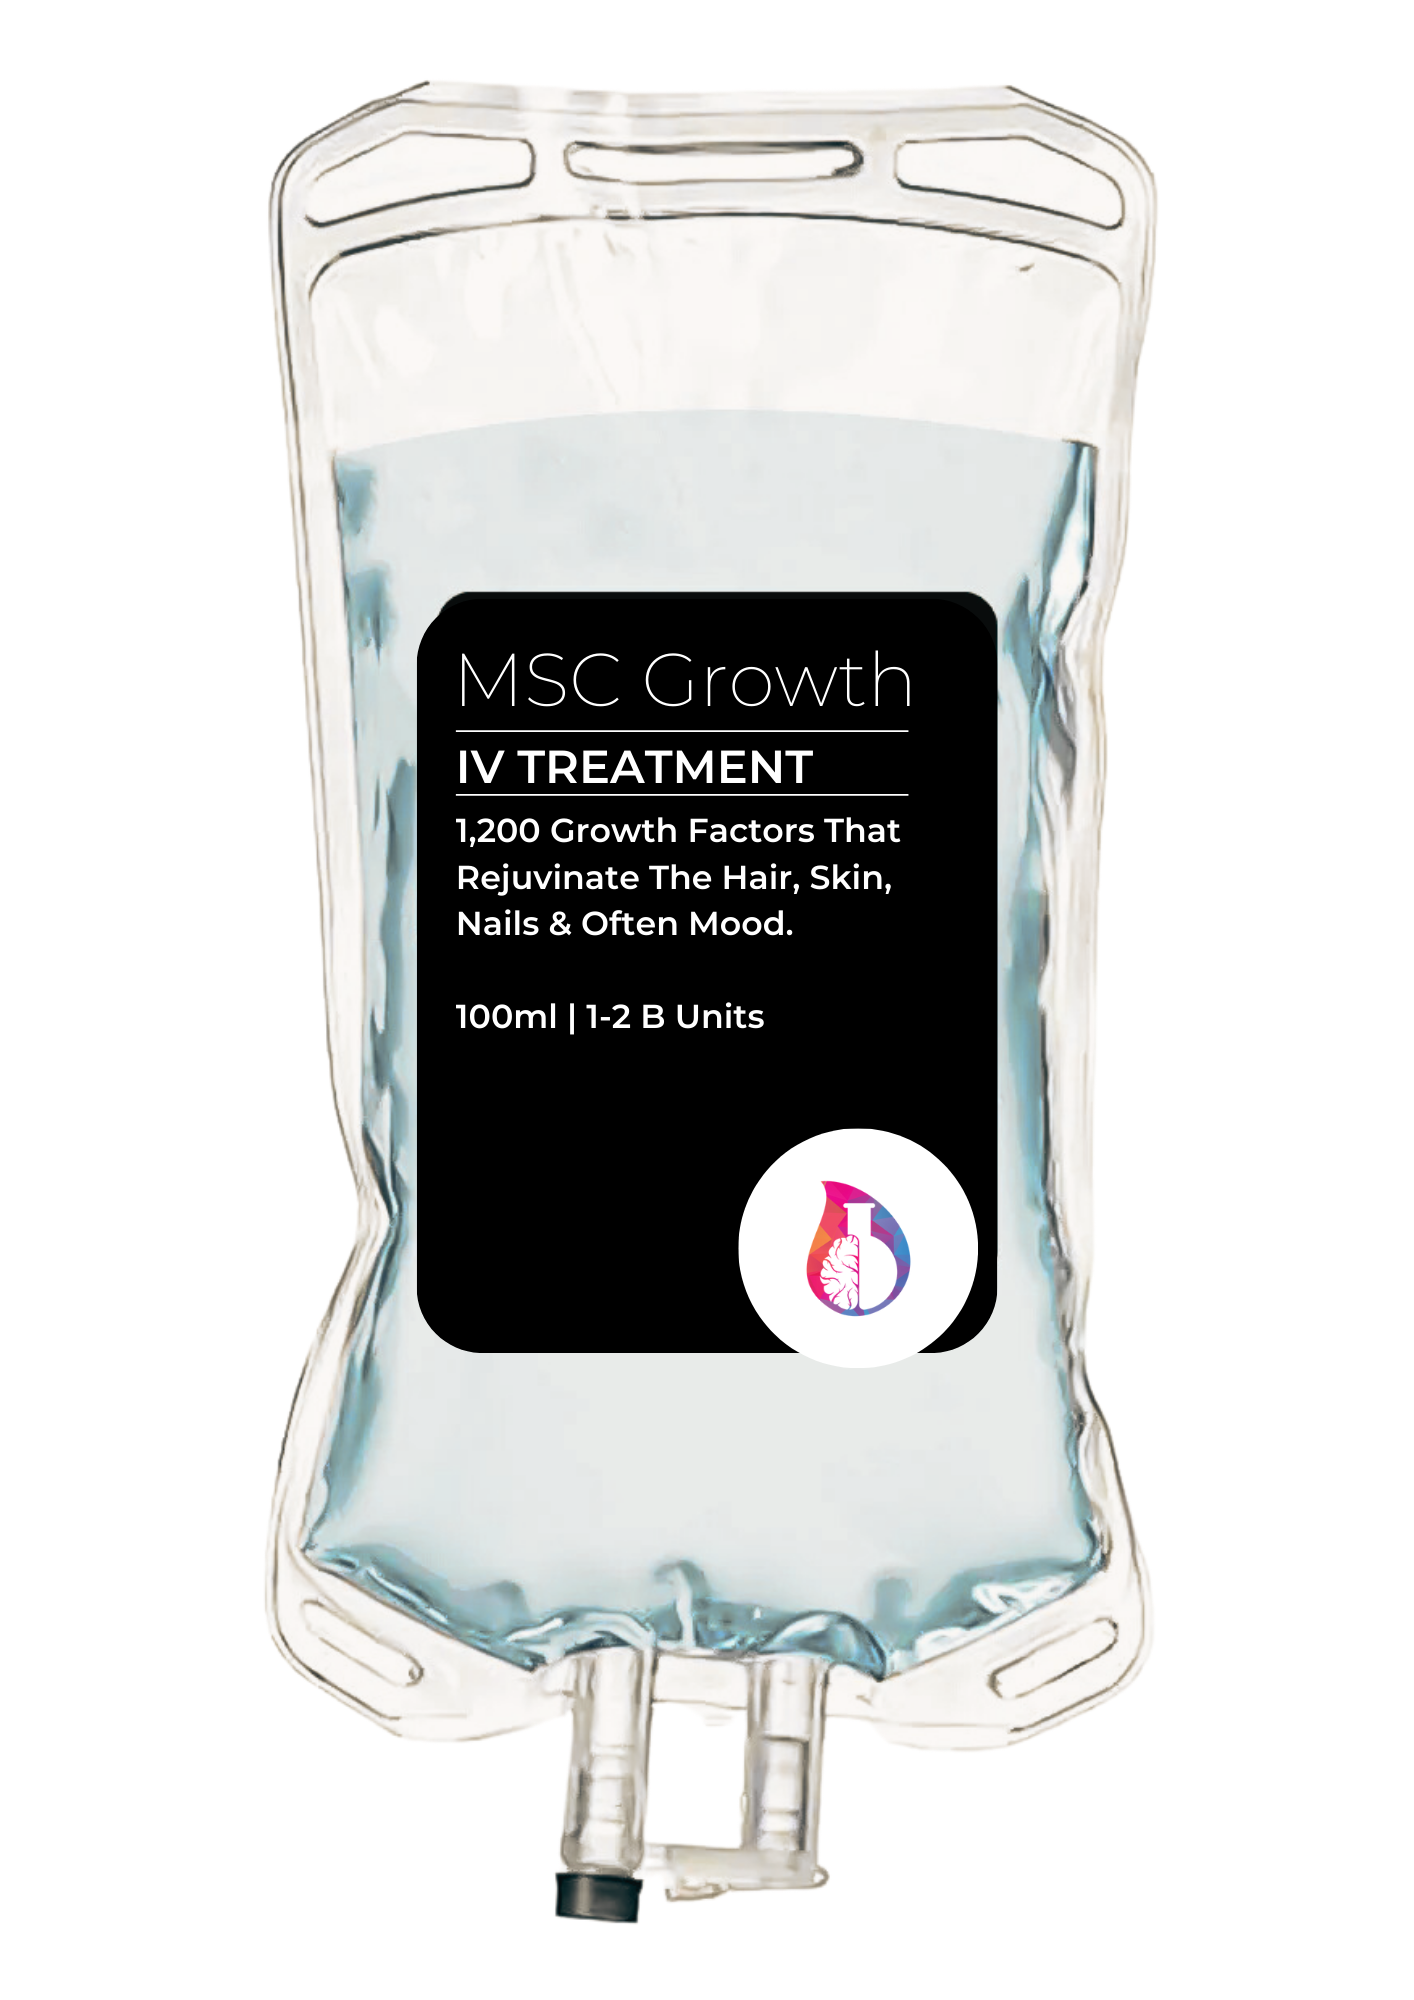 MSC stem cell derived growth factor IV